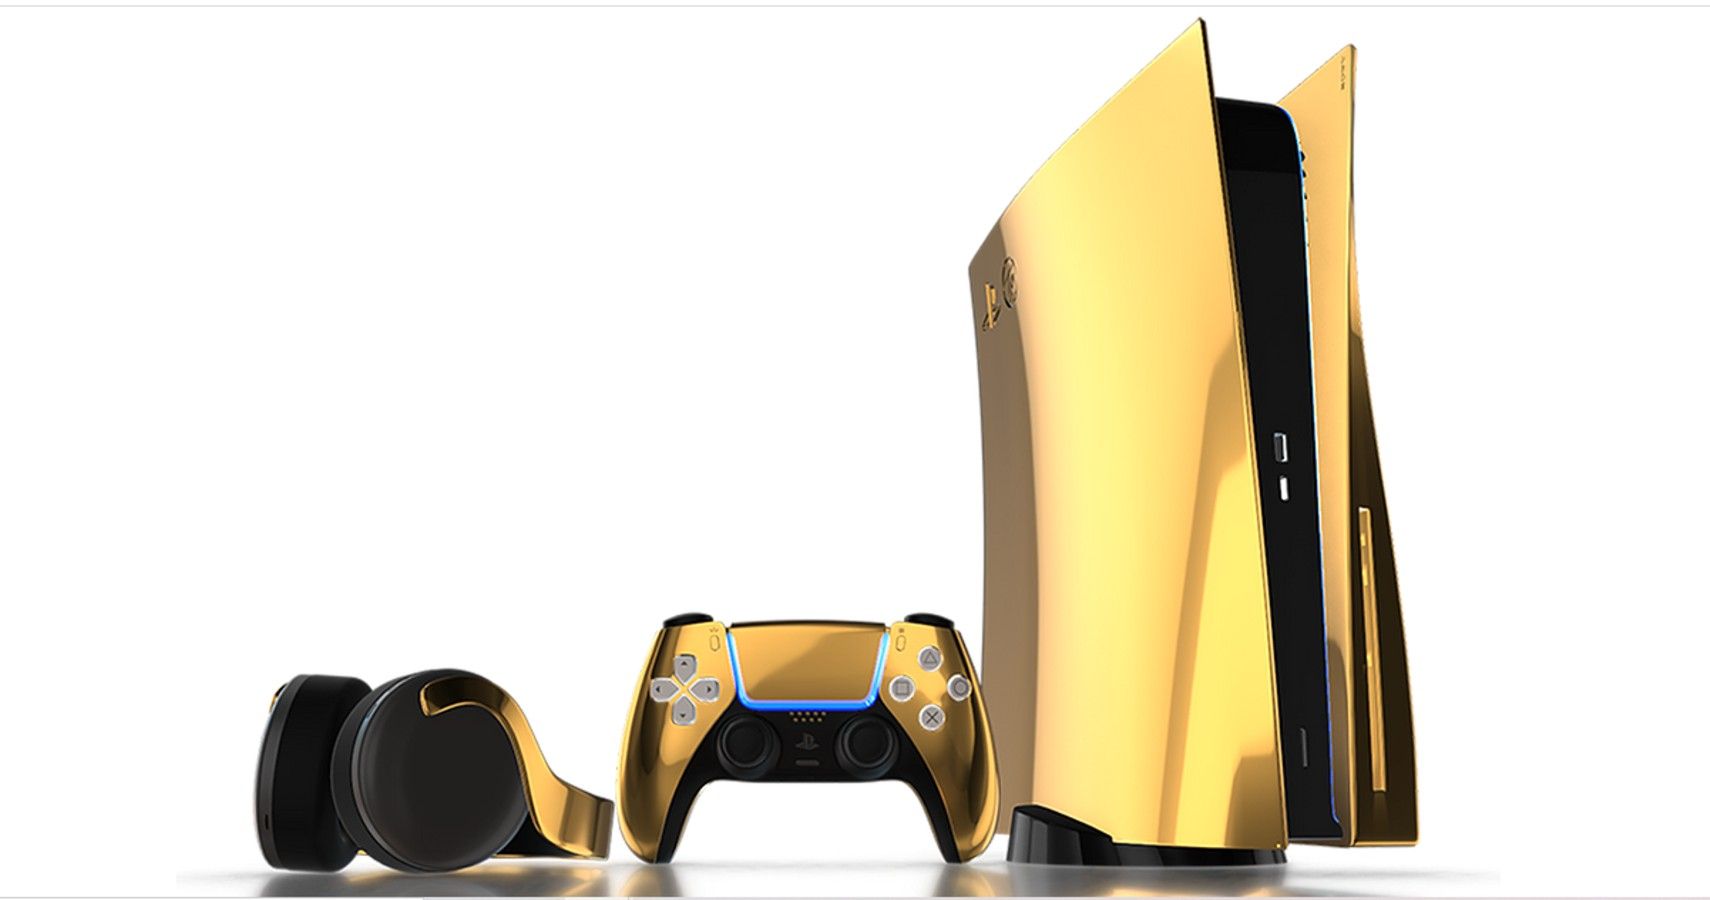 THE £8000 DOLLAR GOLDEN 24K PS5 UNBOXING / REACTION - GOLD PLAYSTATION 5  ft. SIDEMAN MINIMETER 